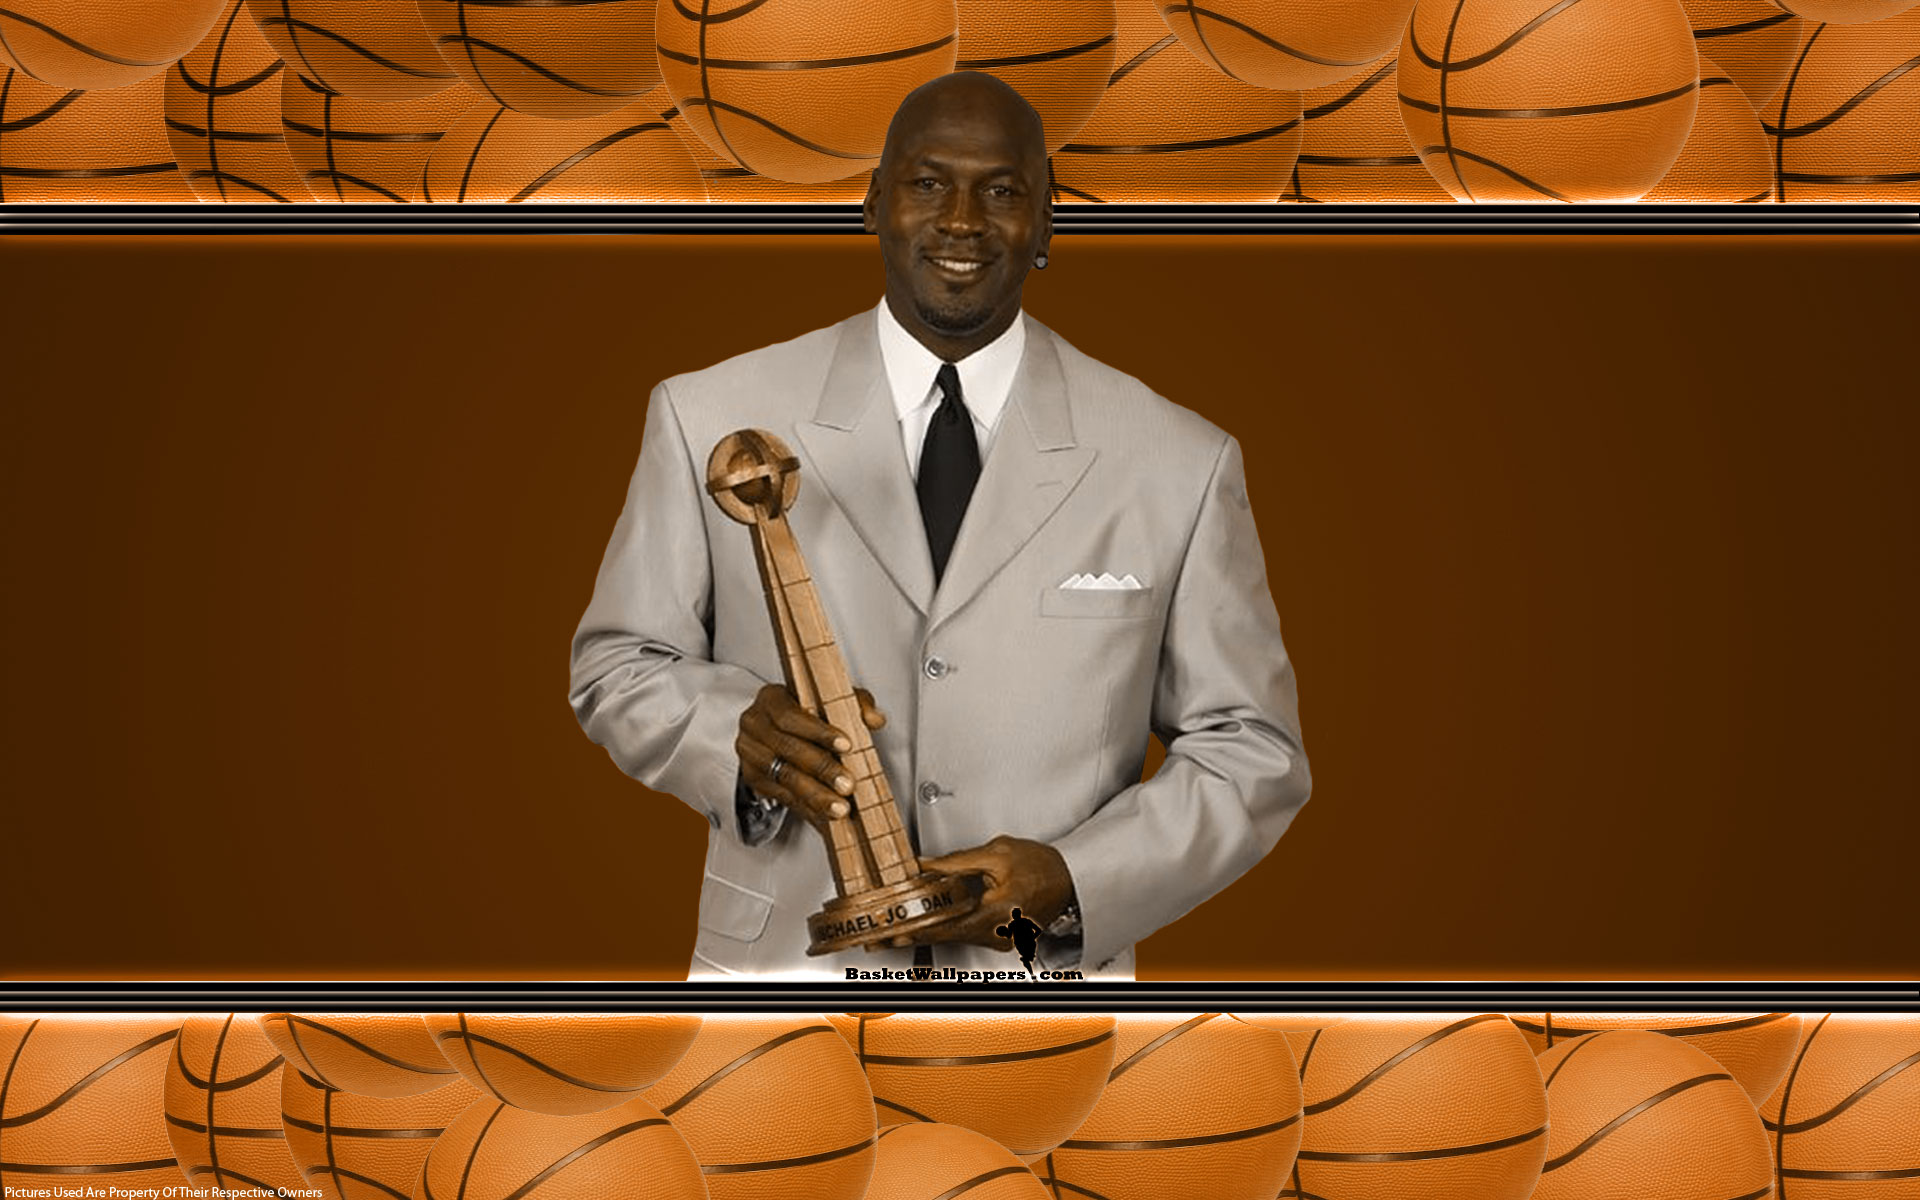 Michael Jordan 2009 Hall Of Fame Widescreen Wallpaper | Basketball Wallpapers at ...